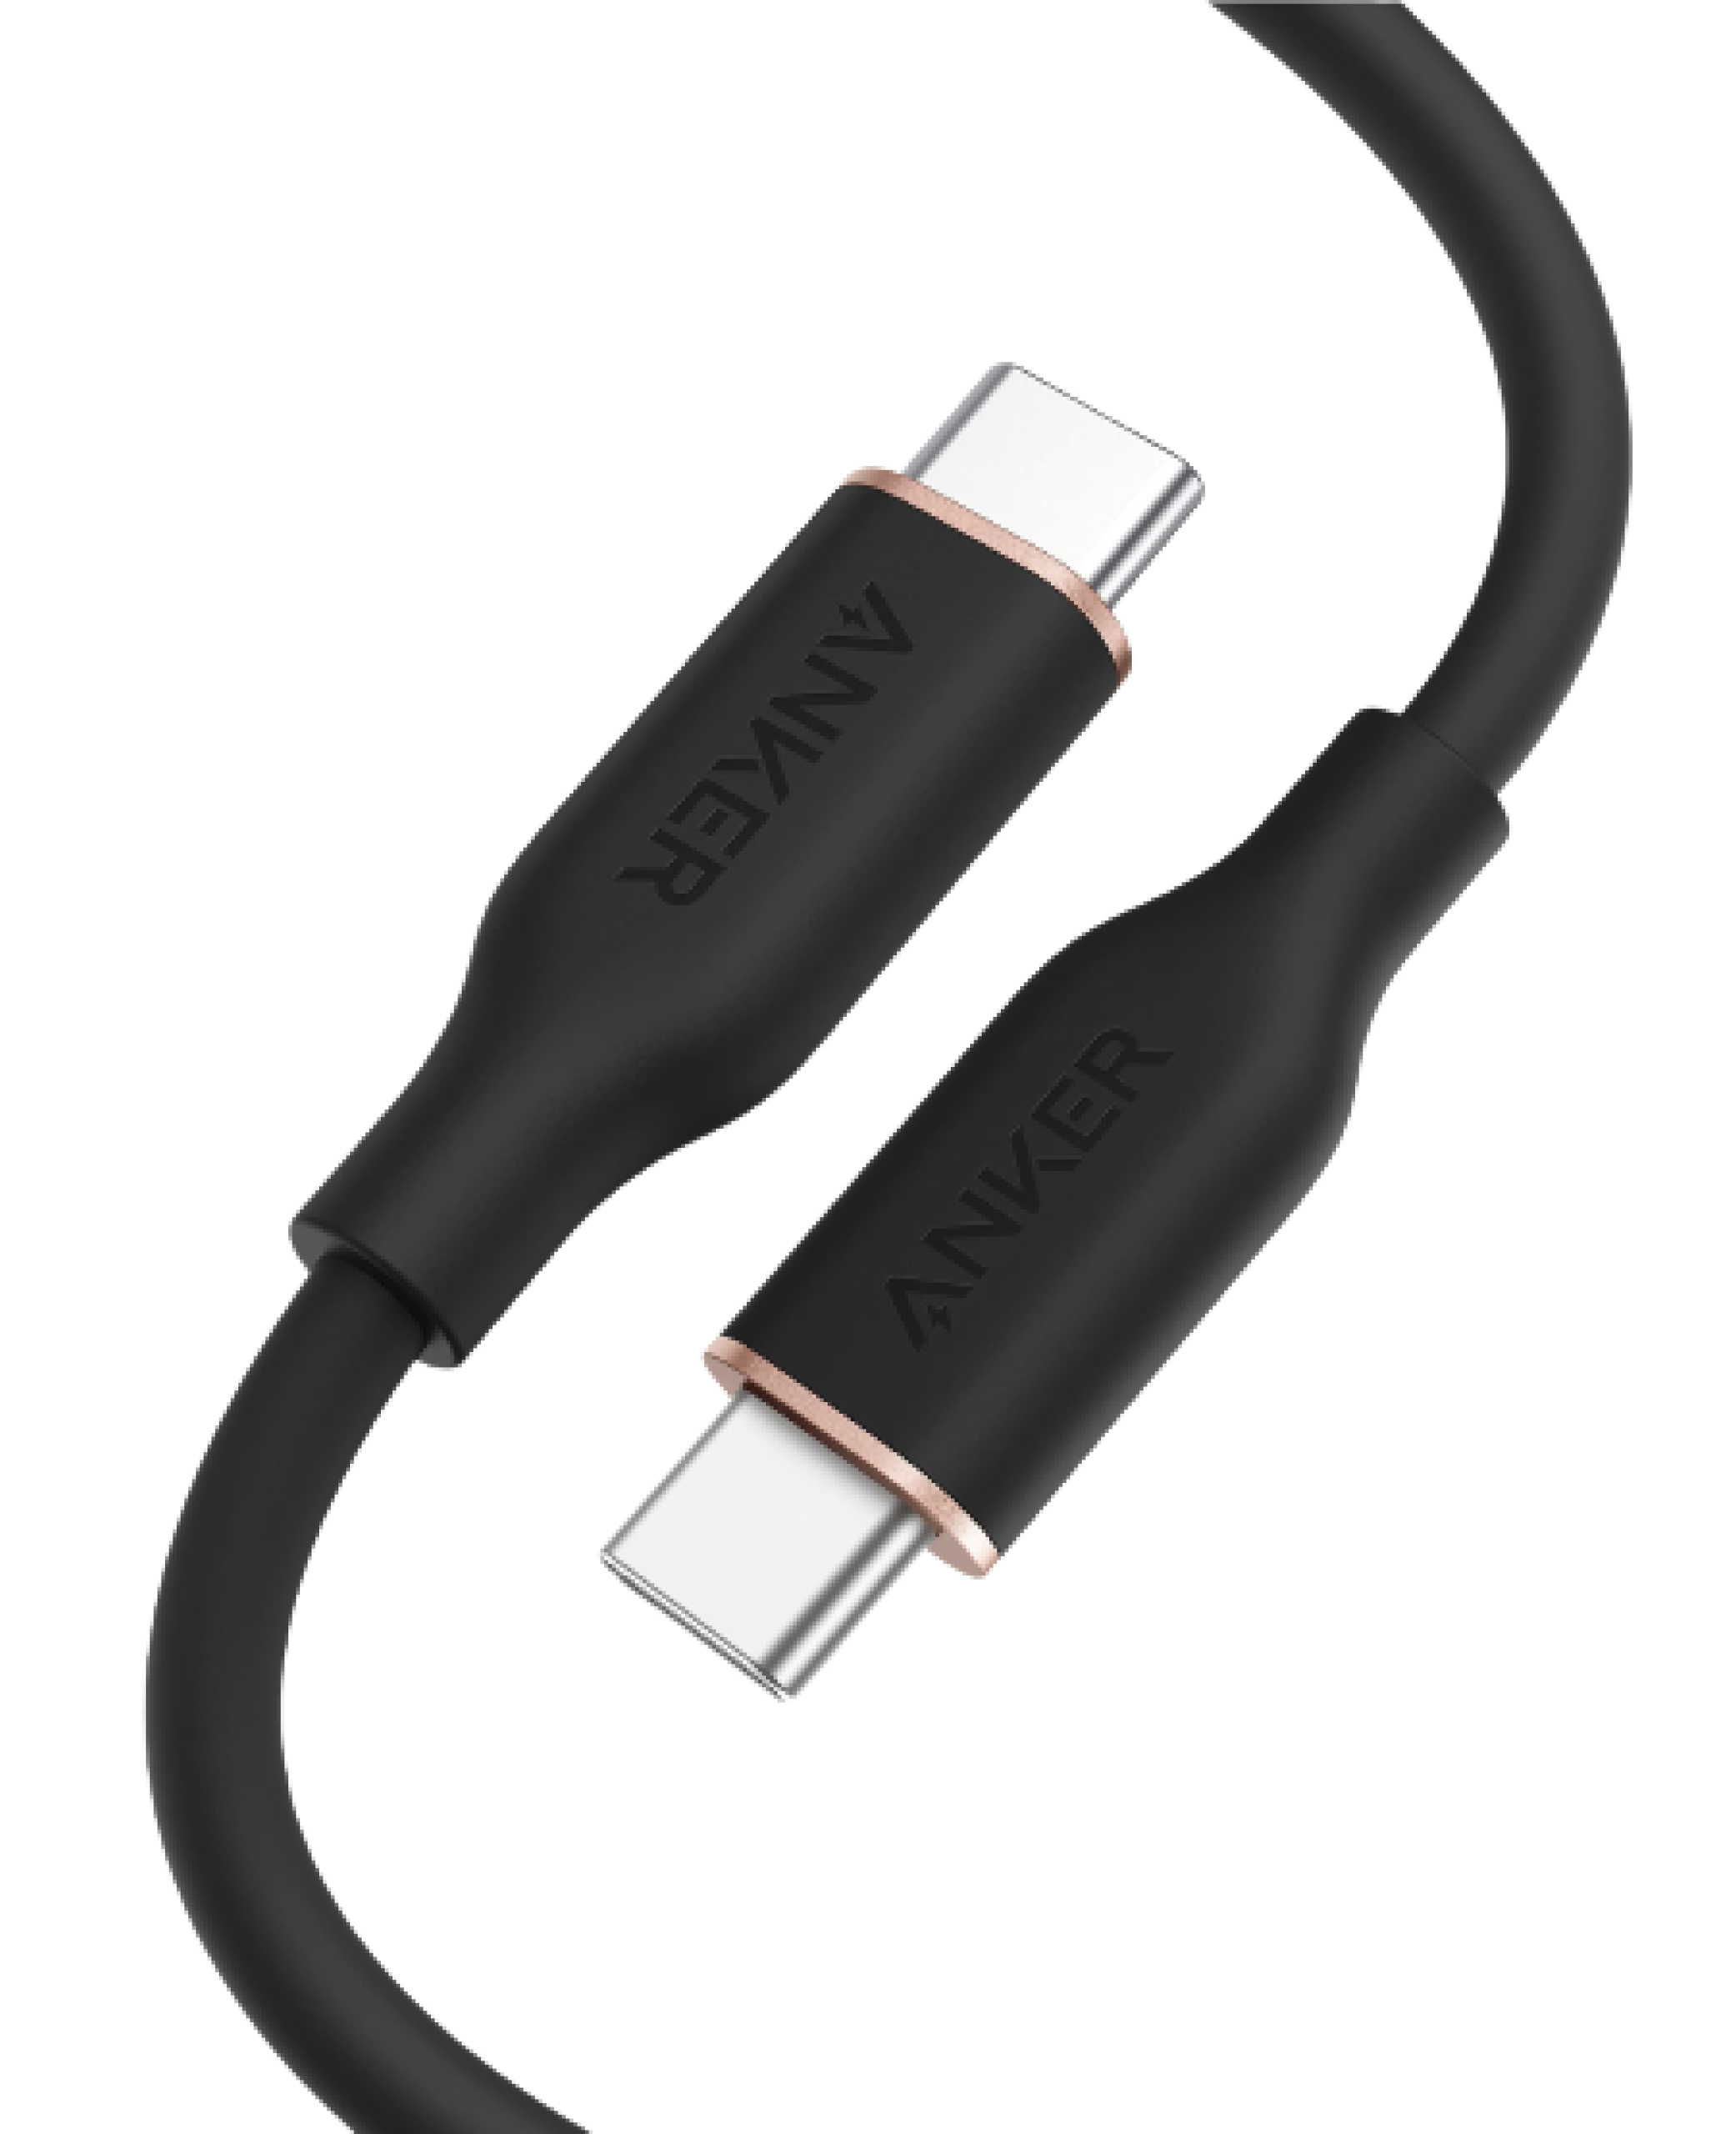 USB-C Cables - Anker US